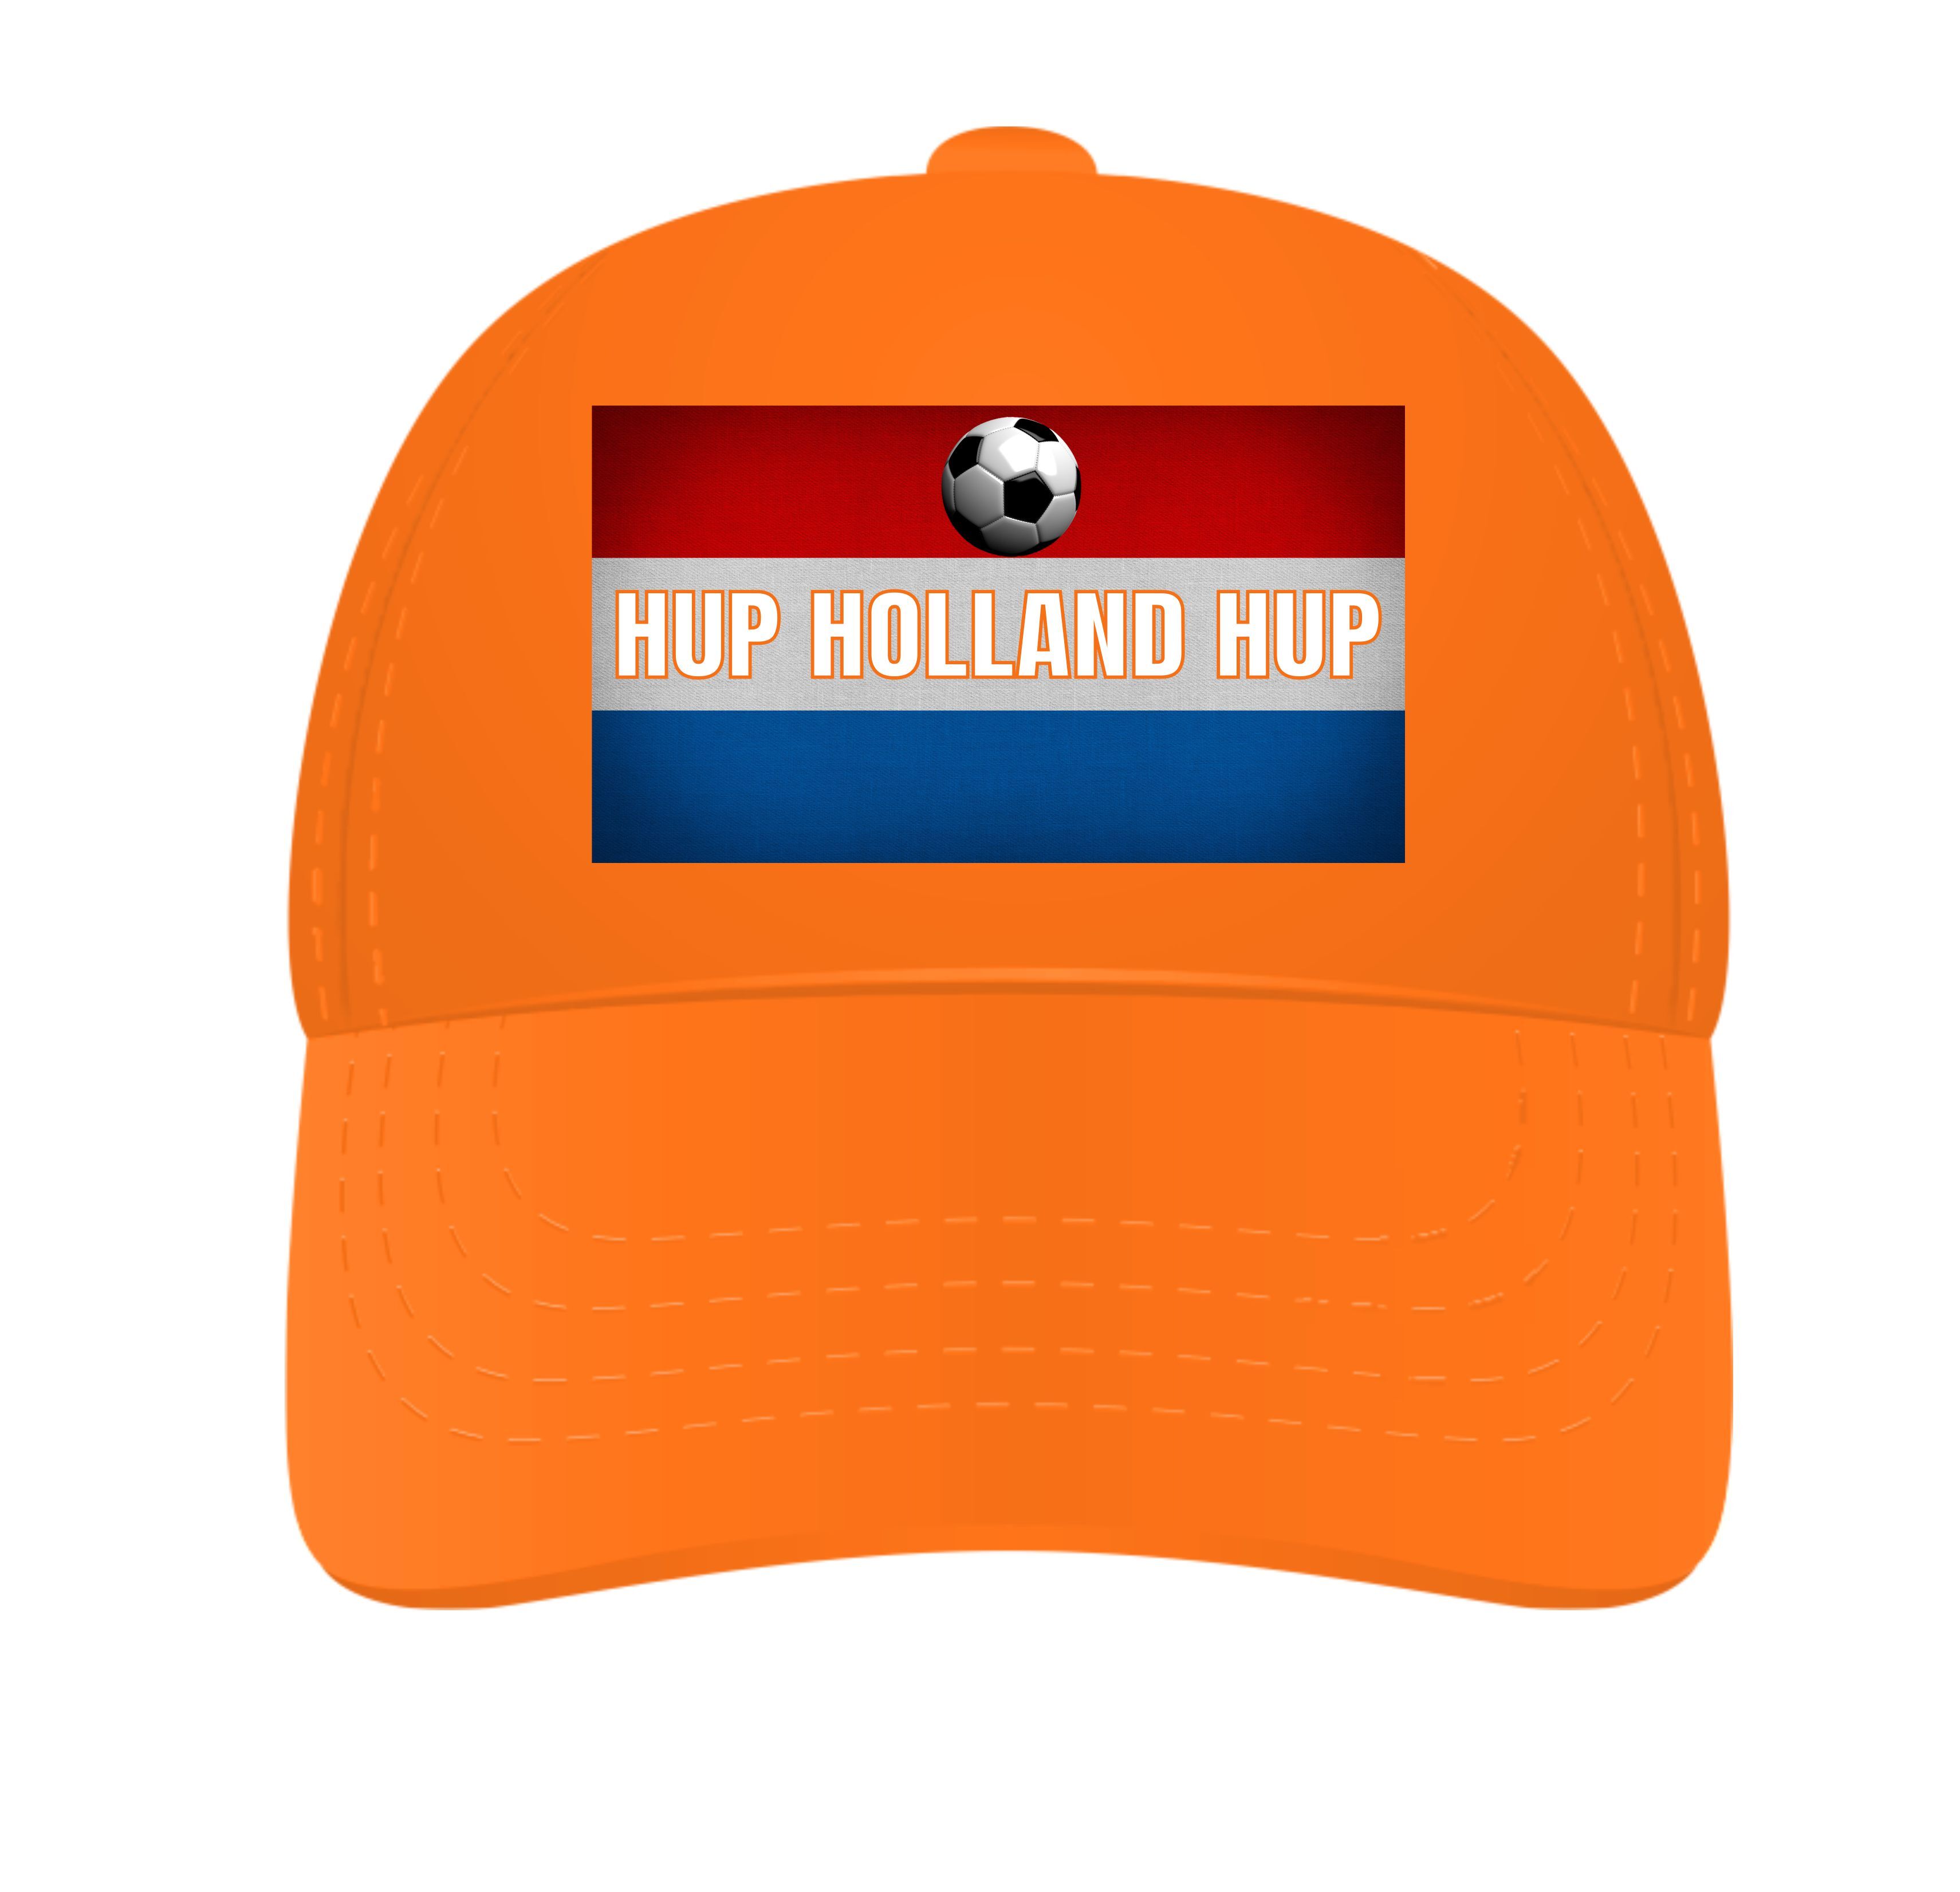 Vintage oranje pet hup Holland hup met vlag van Nederland